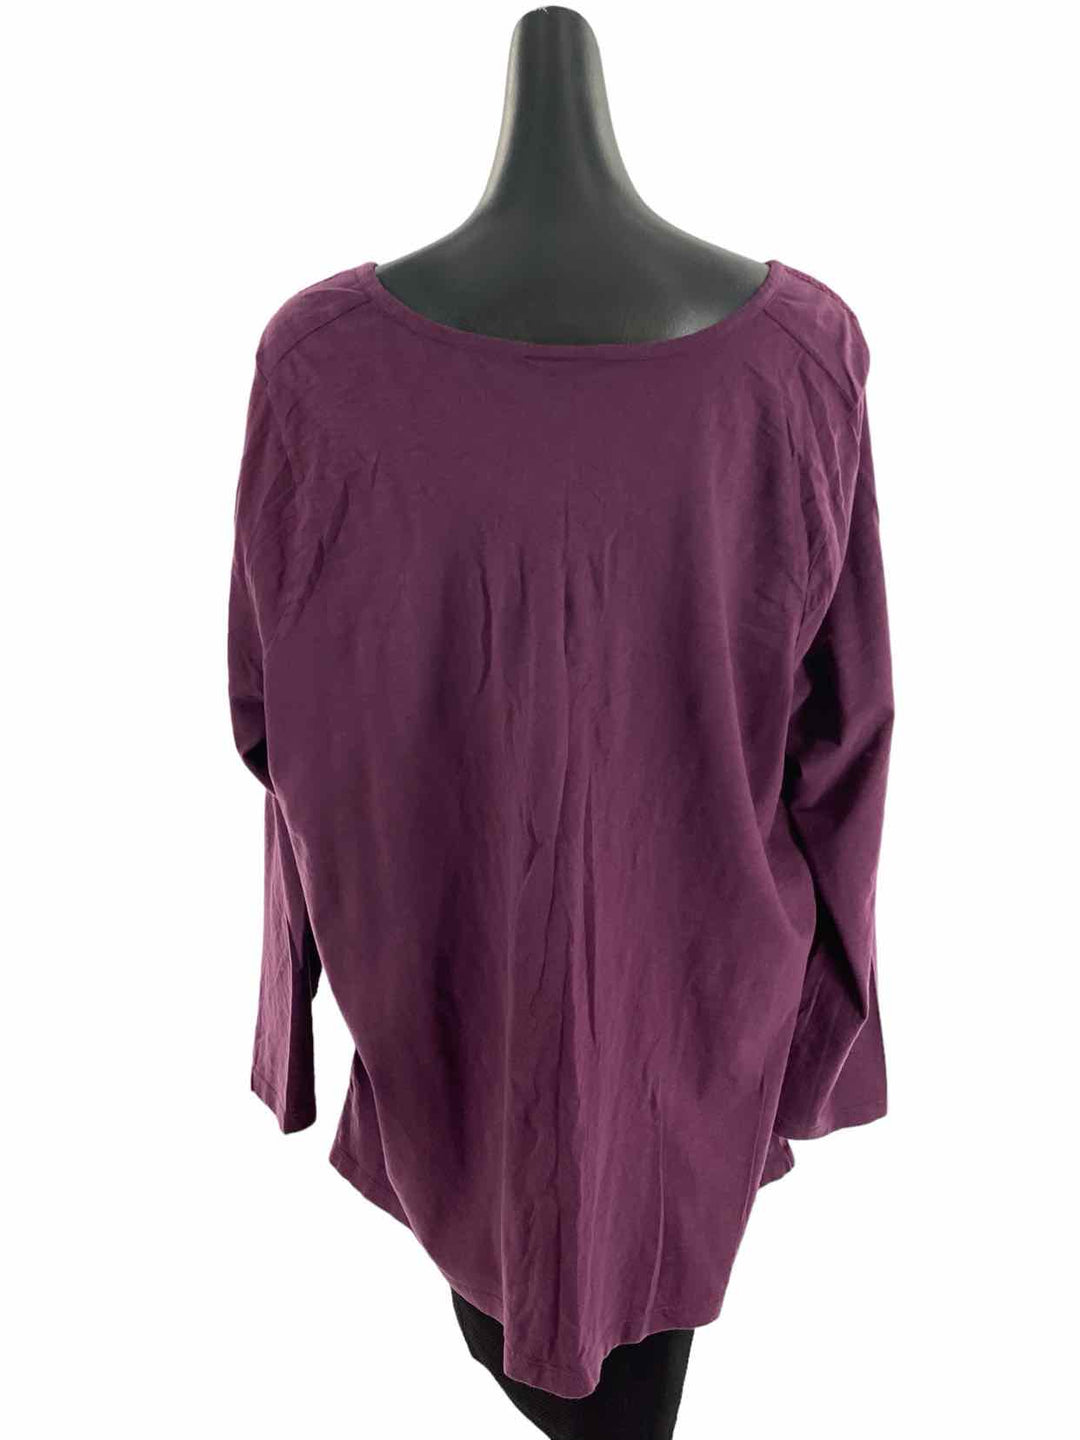 J Jill Size 3X Purple Long Sleeve Shirts